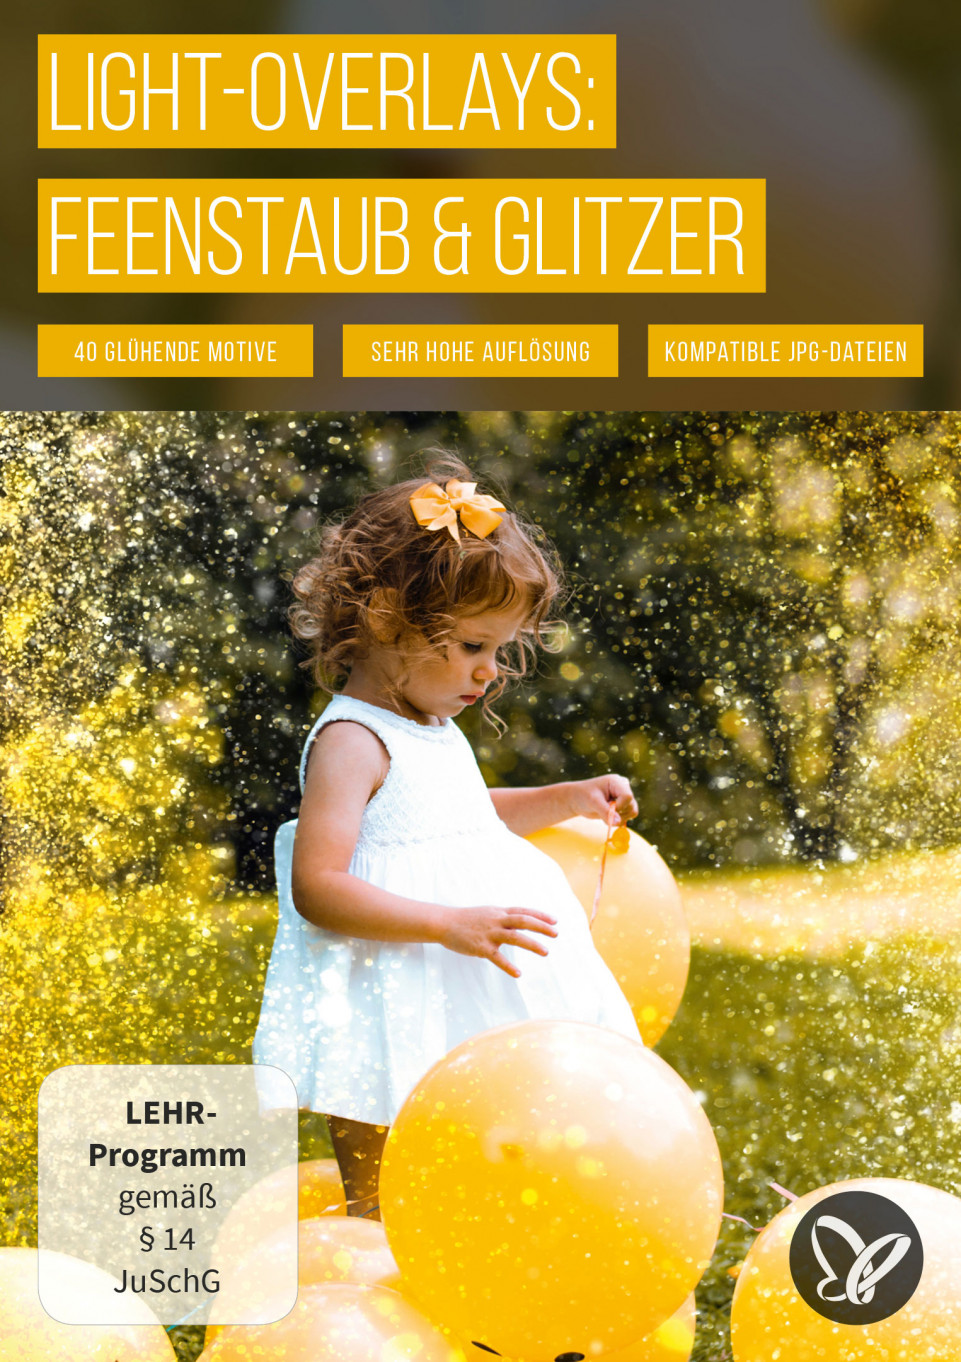 Glow- & Light-Overlays – Feenstaub & Glitzer